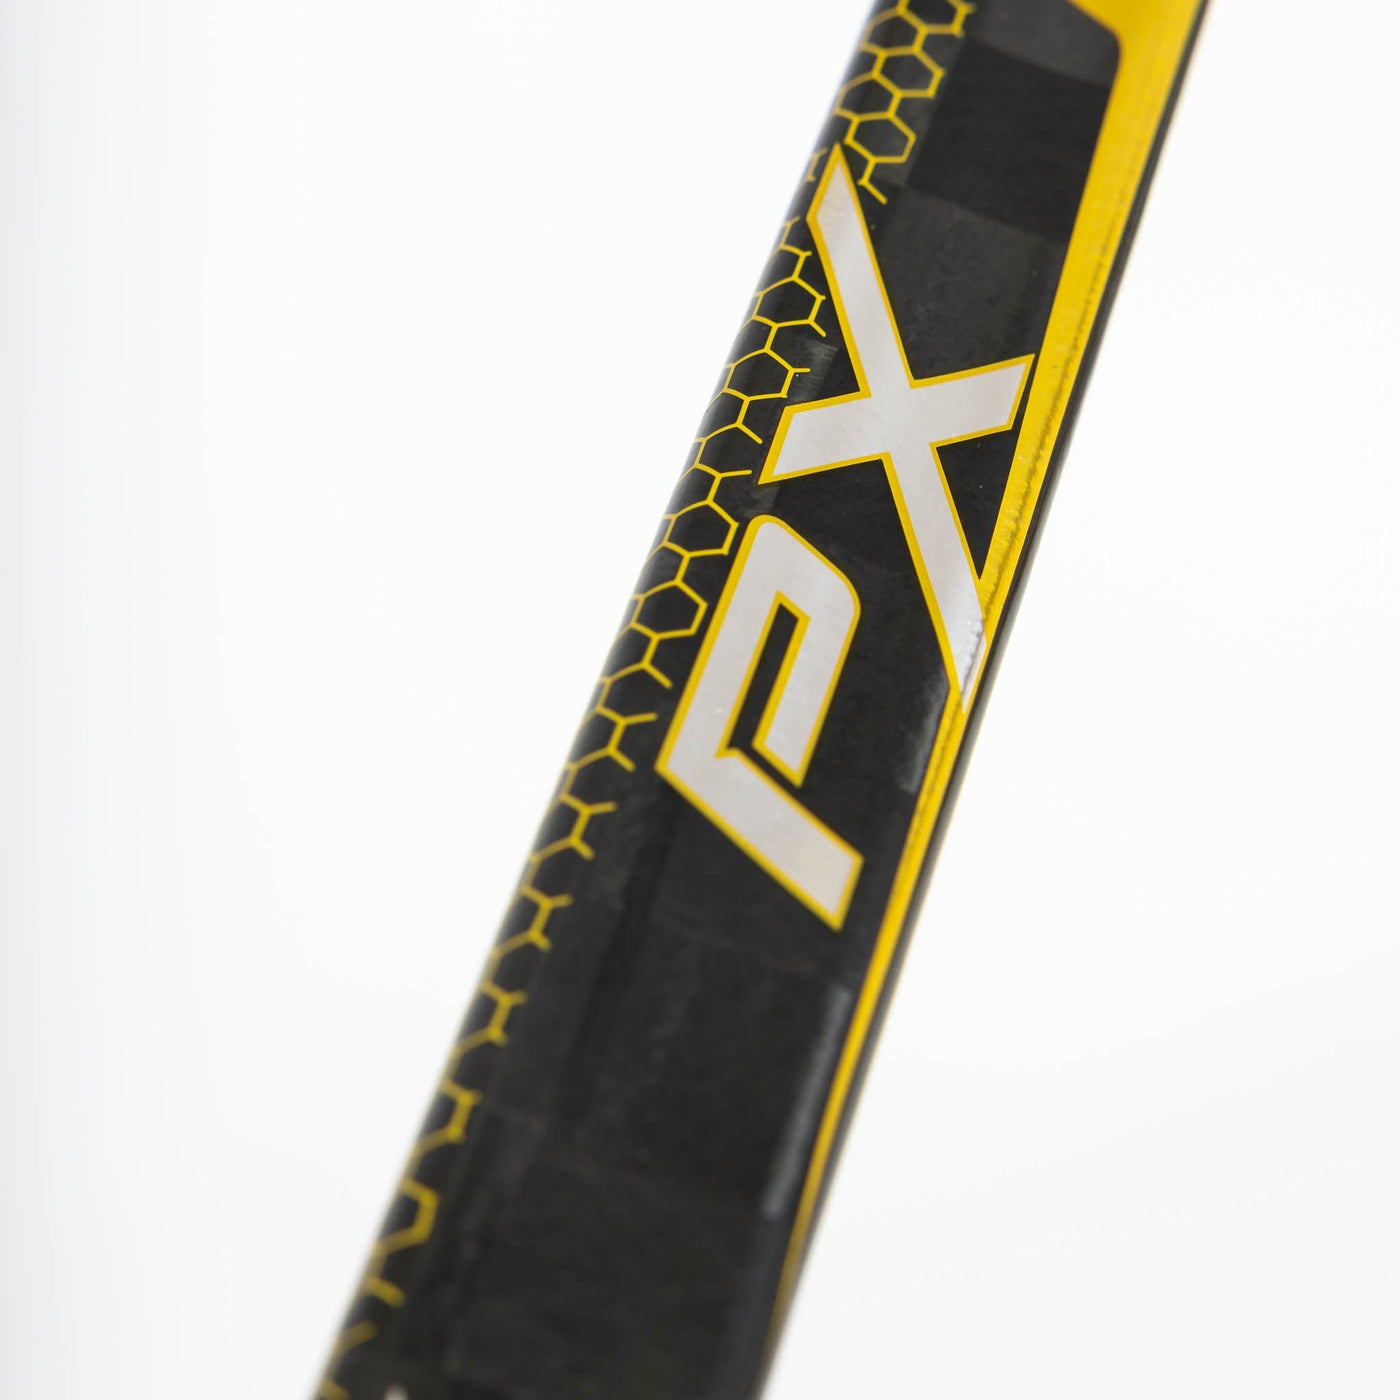 TRUE Catalyst PX Intermediate Hockey Stick